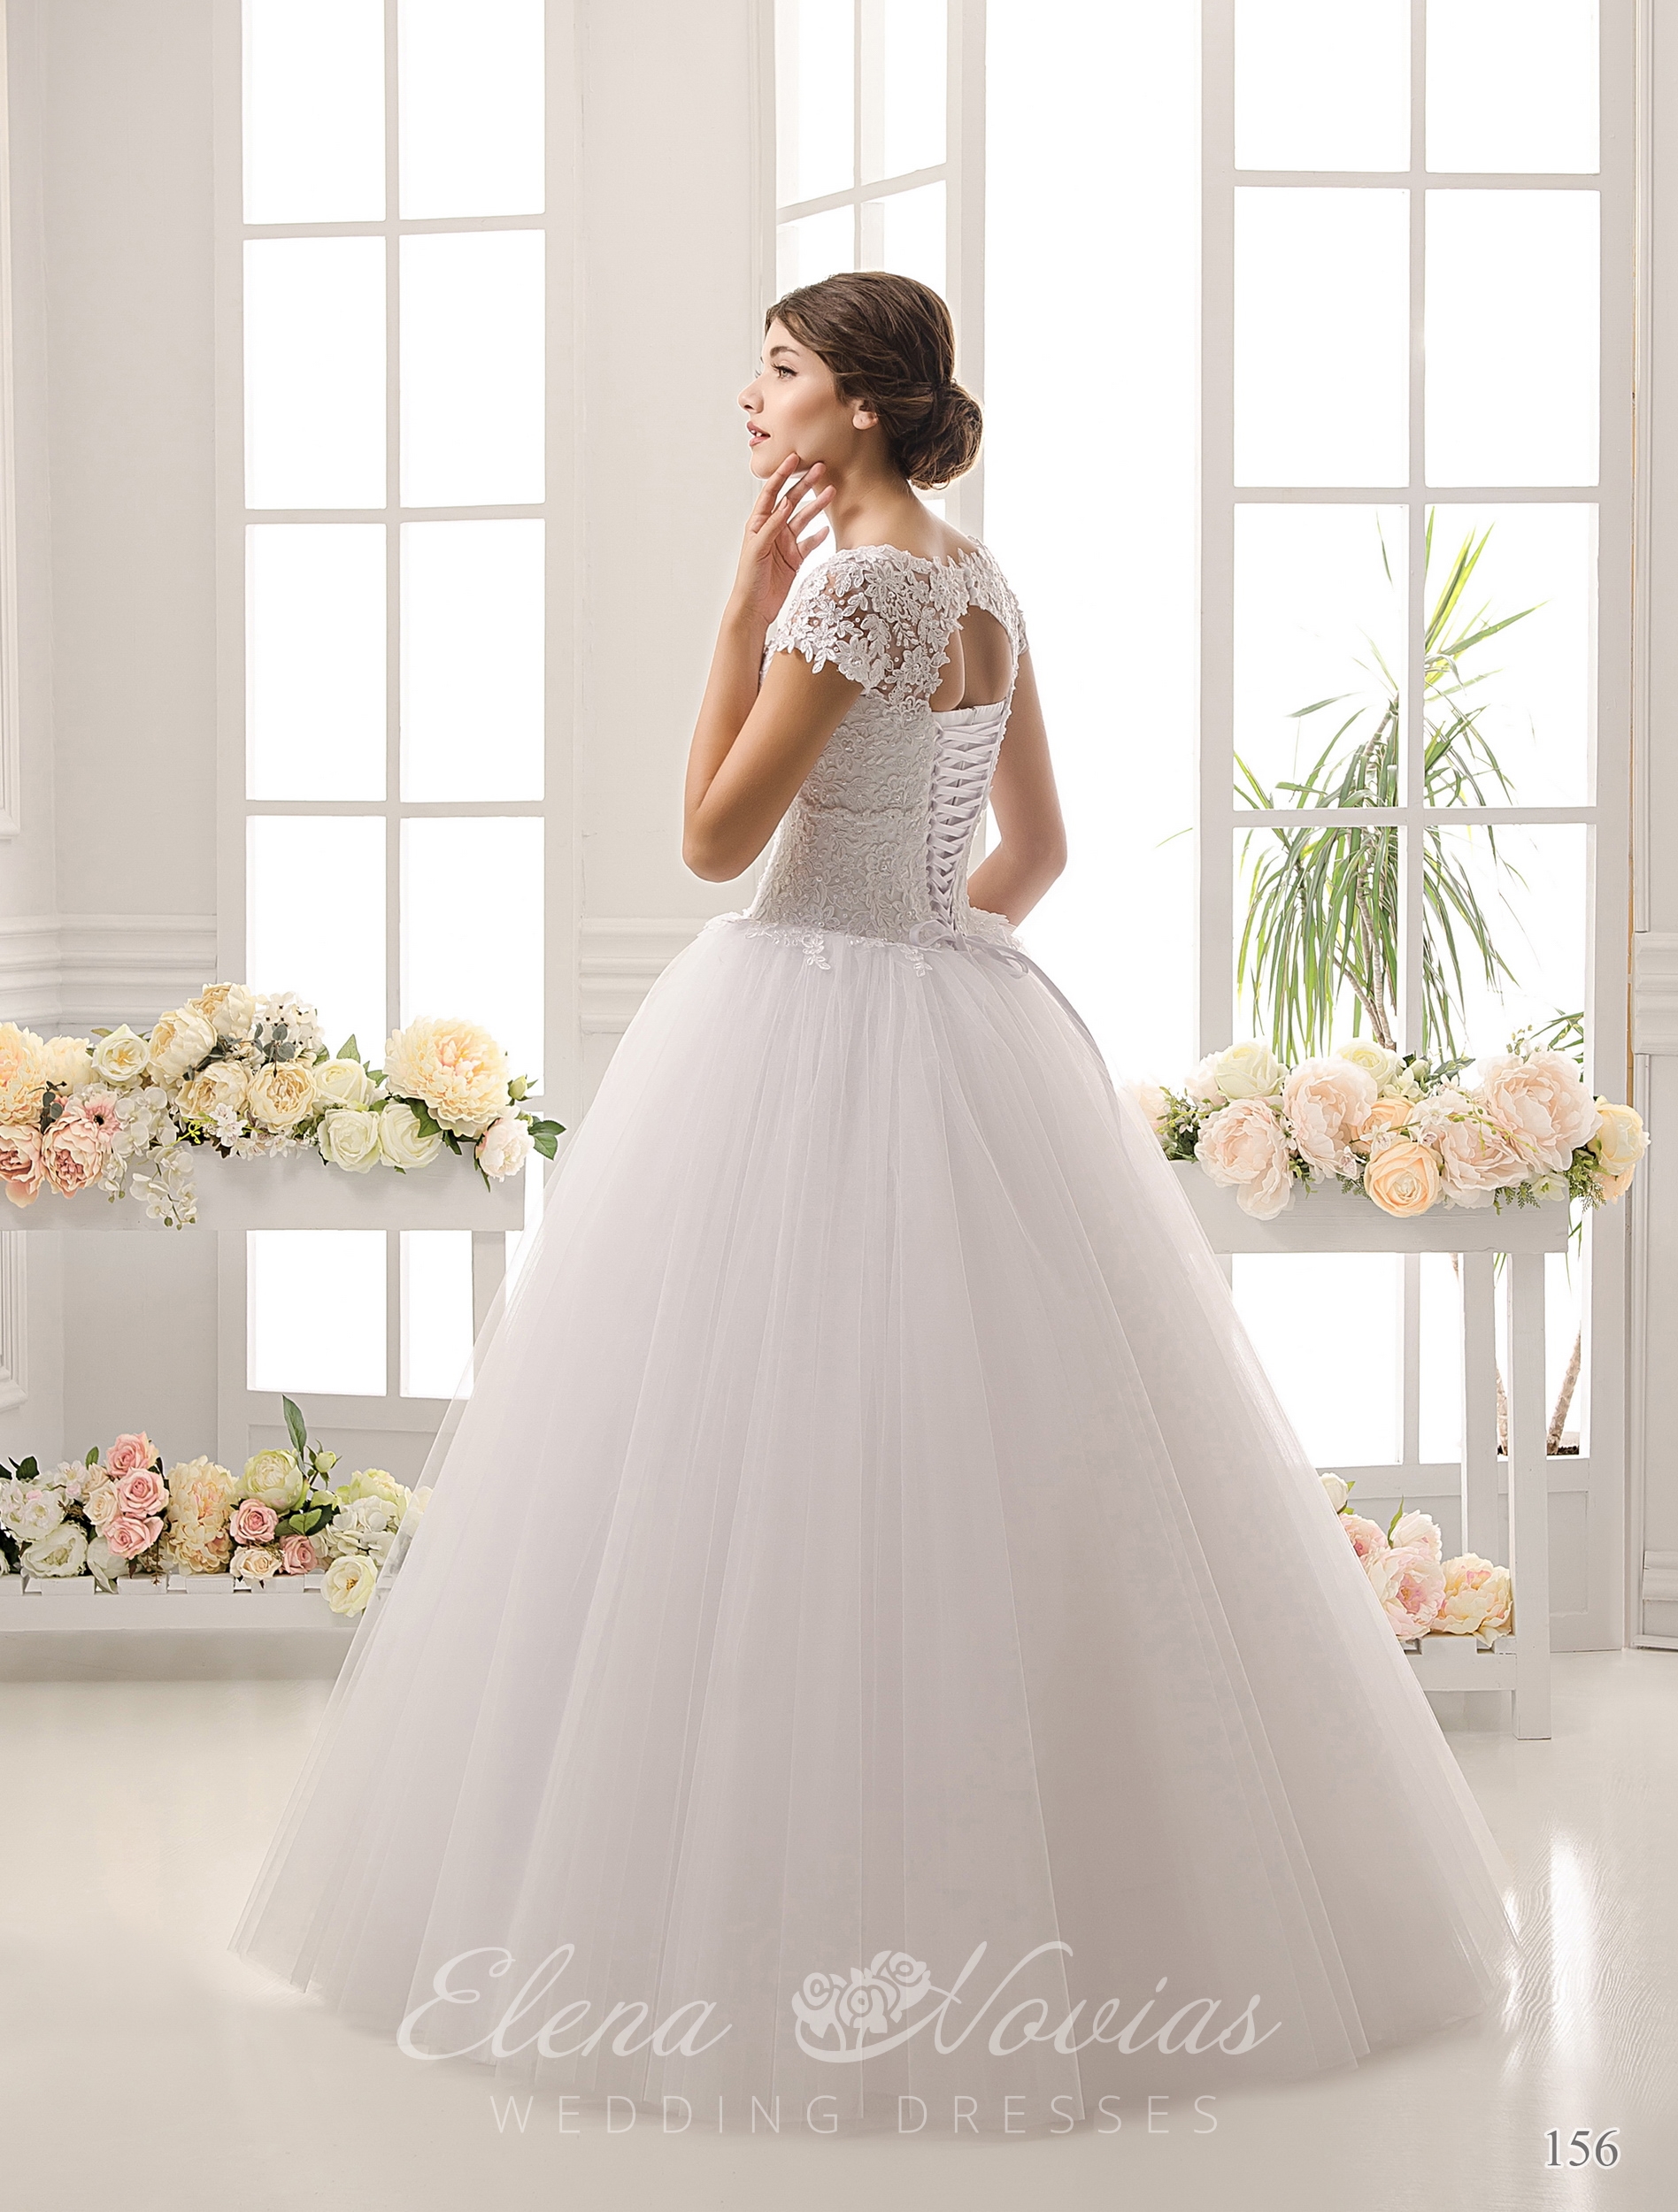 Wedding dresses 156 2